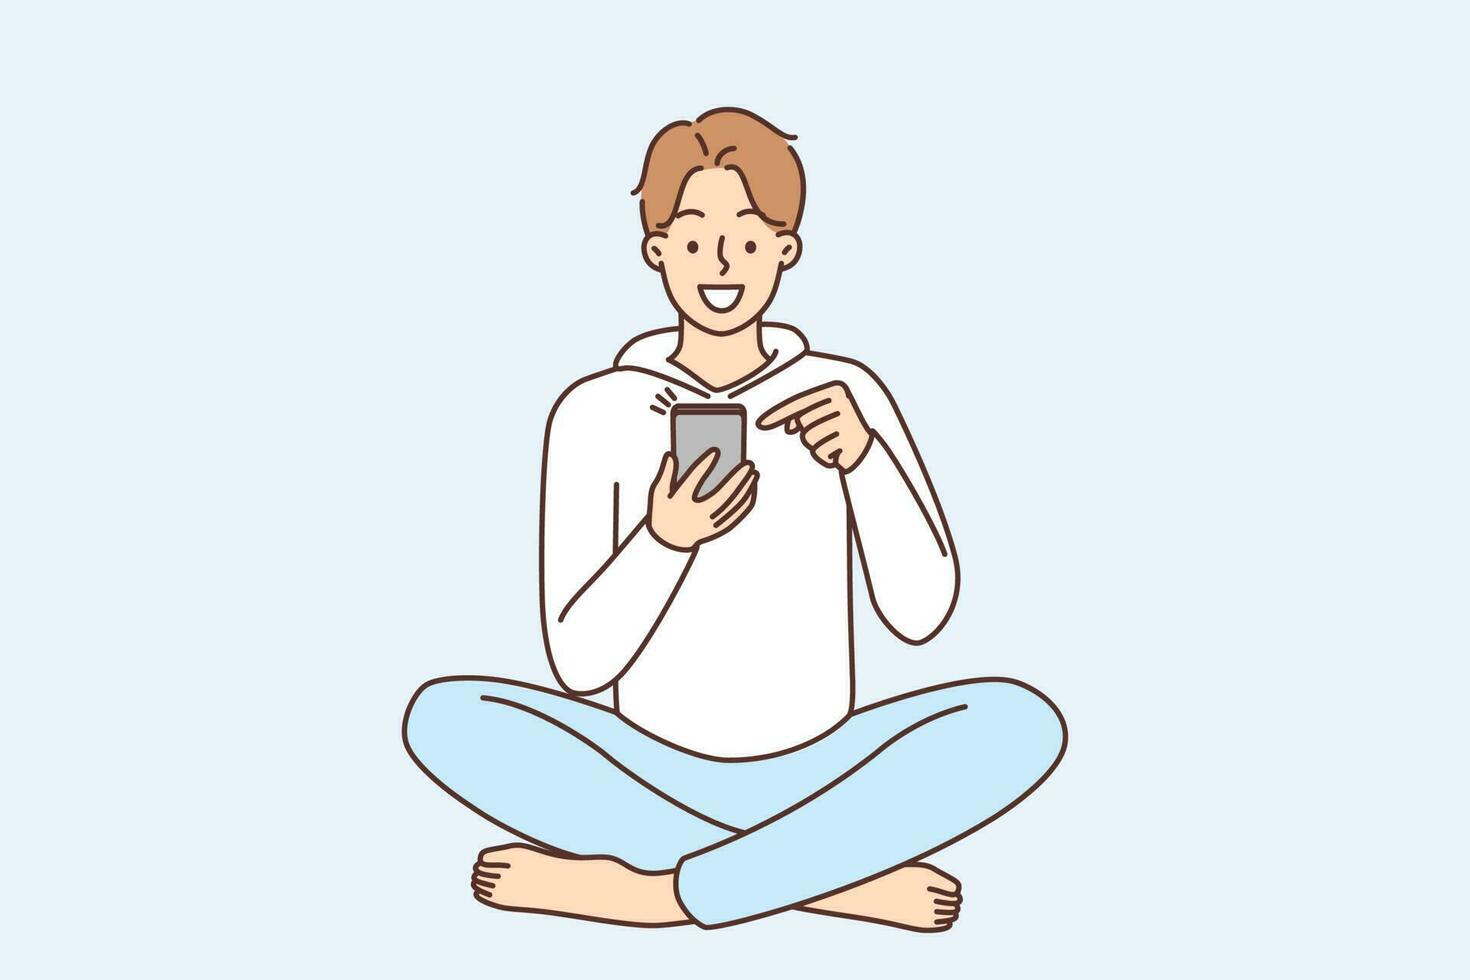 sonriente joven hombre sentar en piso utilizando moderno teléfono inteligente contento chico con Teléfono móvil vistazo Internet o charla en línea en social medios de comunicación. vector ilustración.